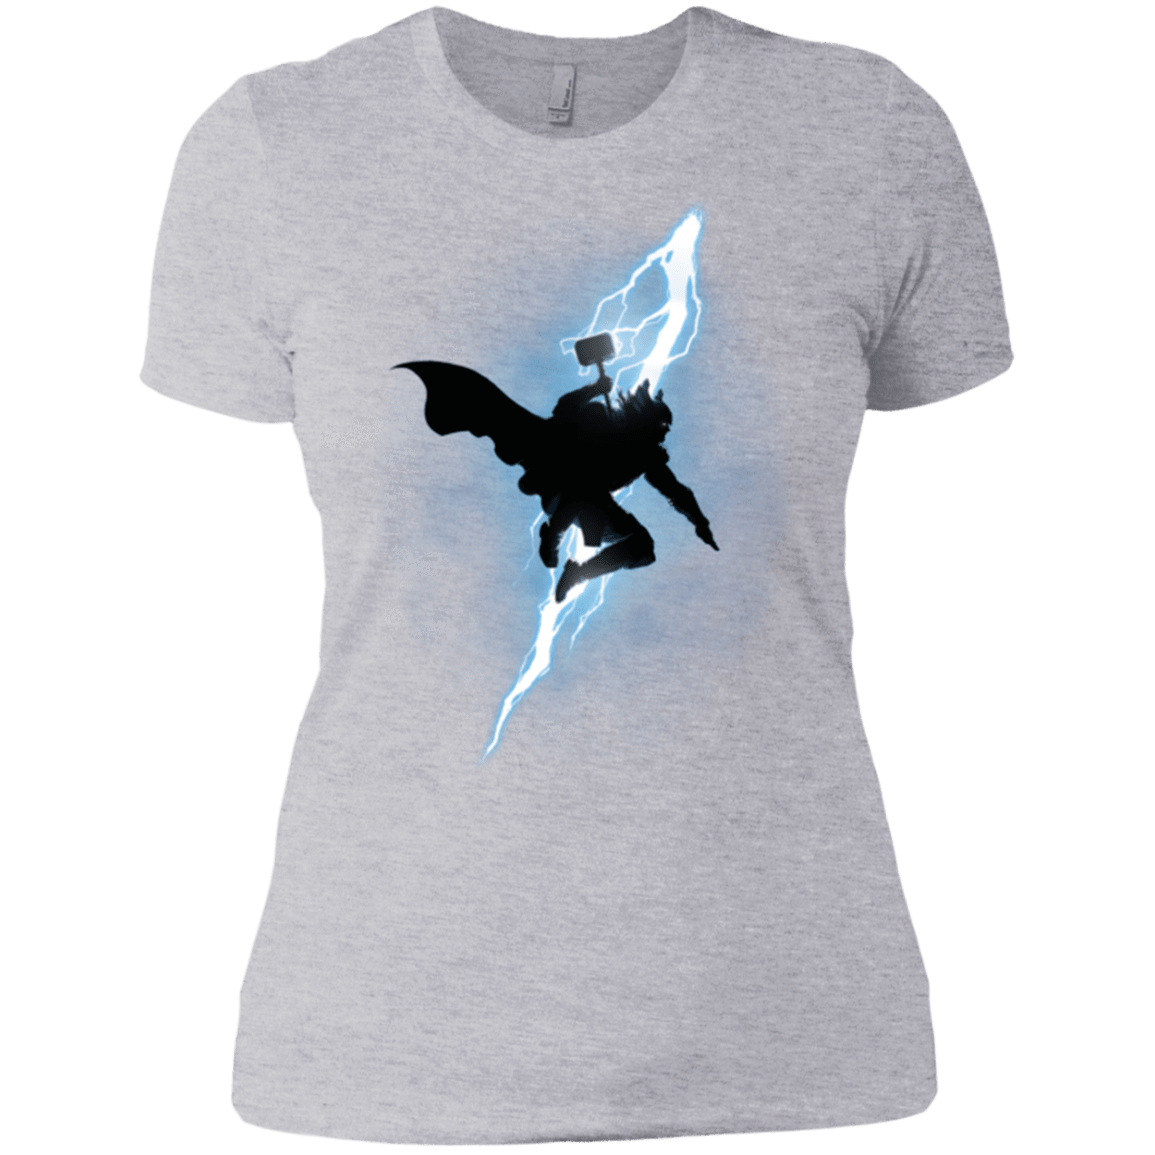 T-Shirts Heather Grey / X-Small The Thunder God Returns Women's Premium T-Shirt